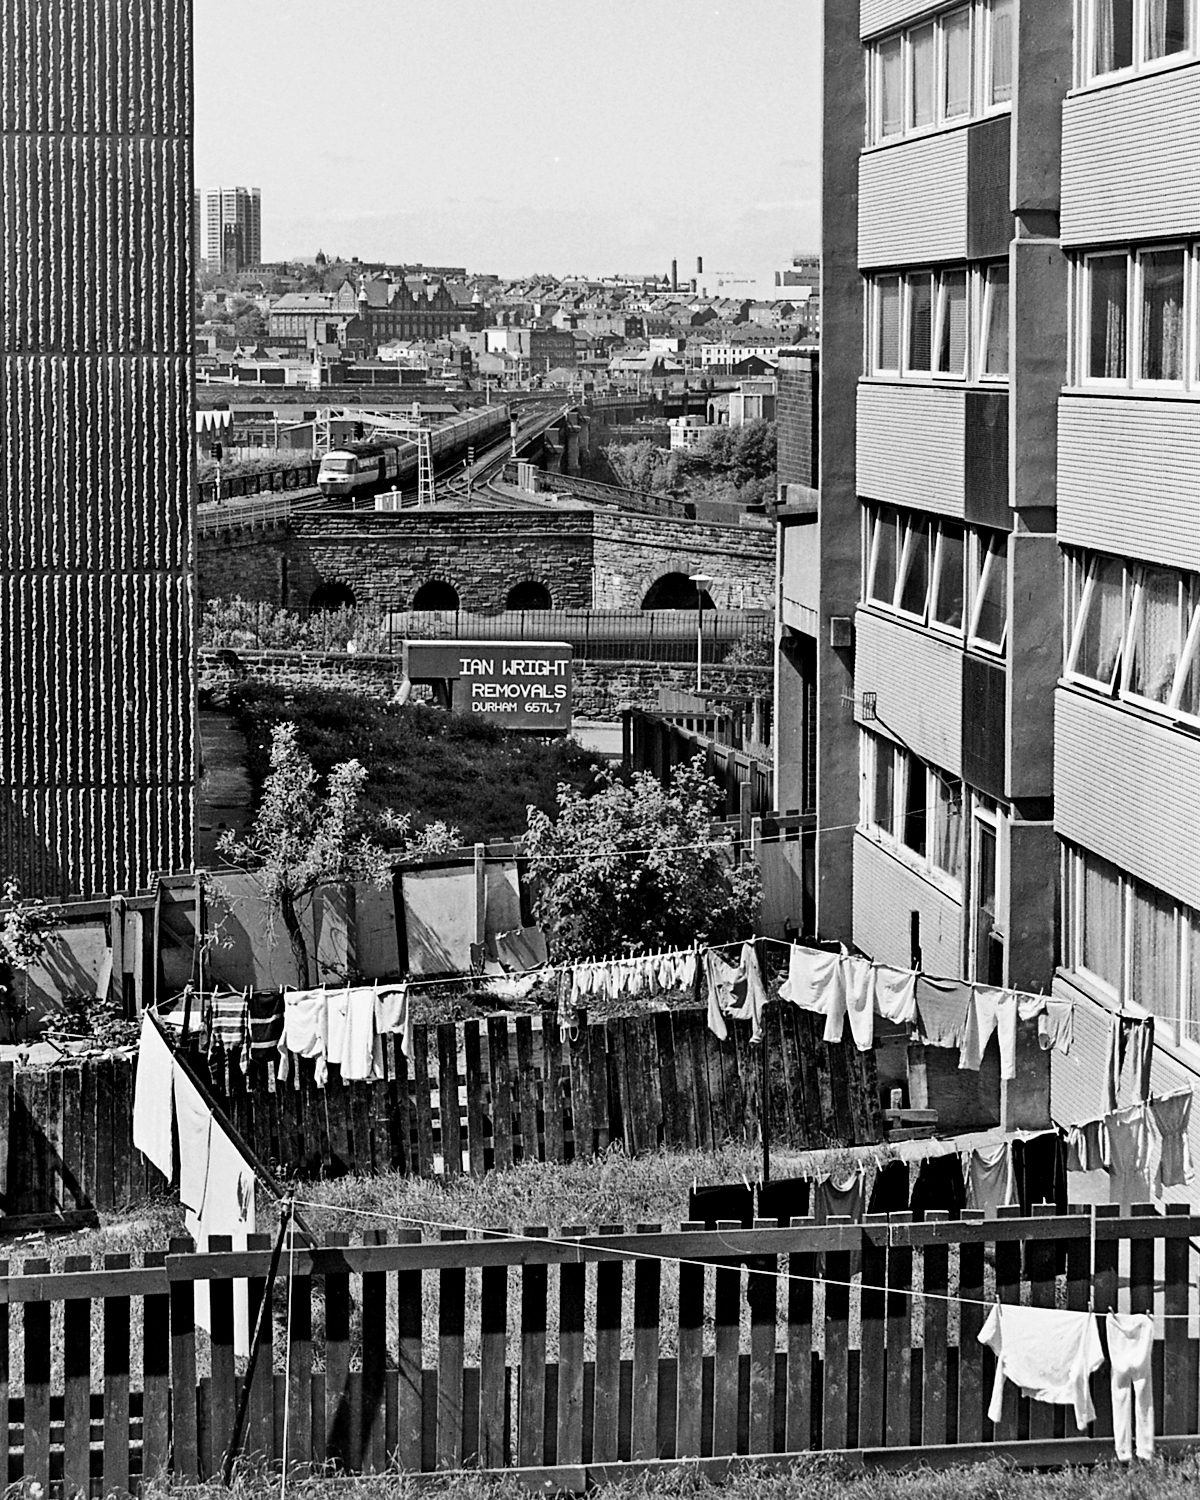 Gateshead 1980s